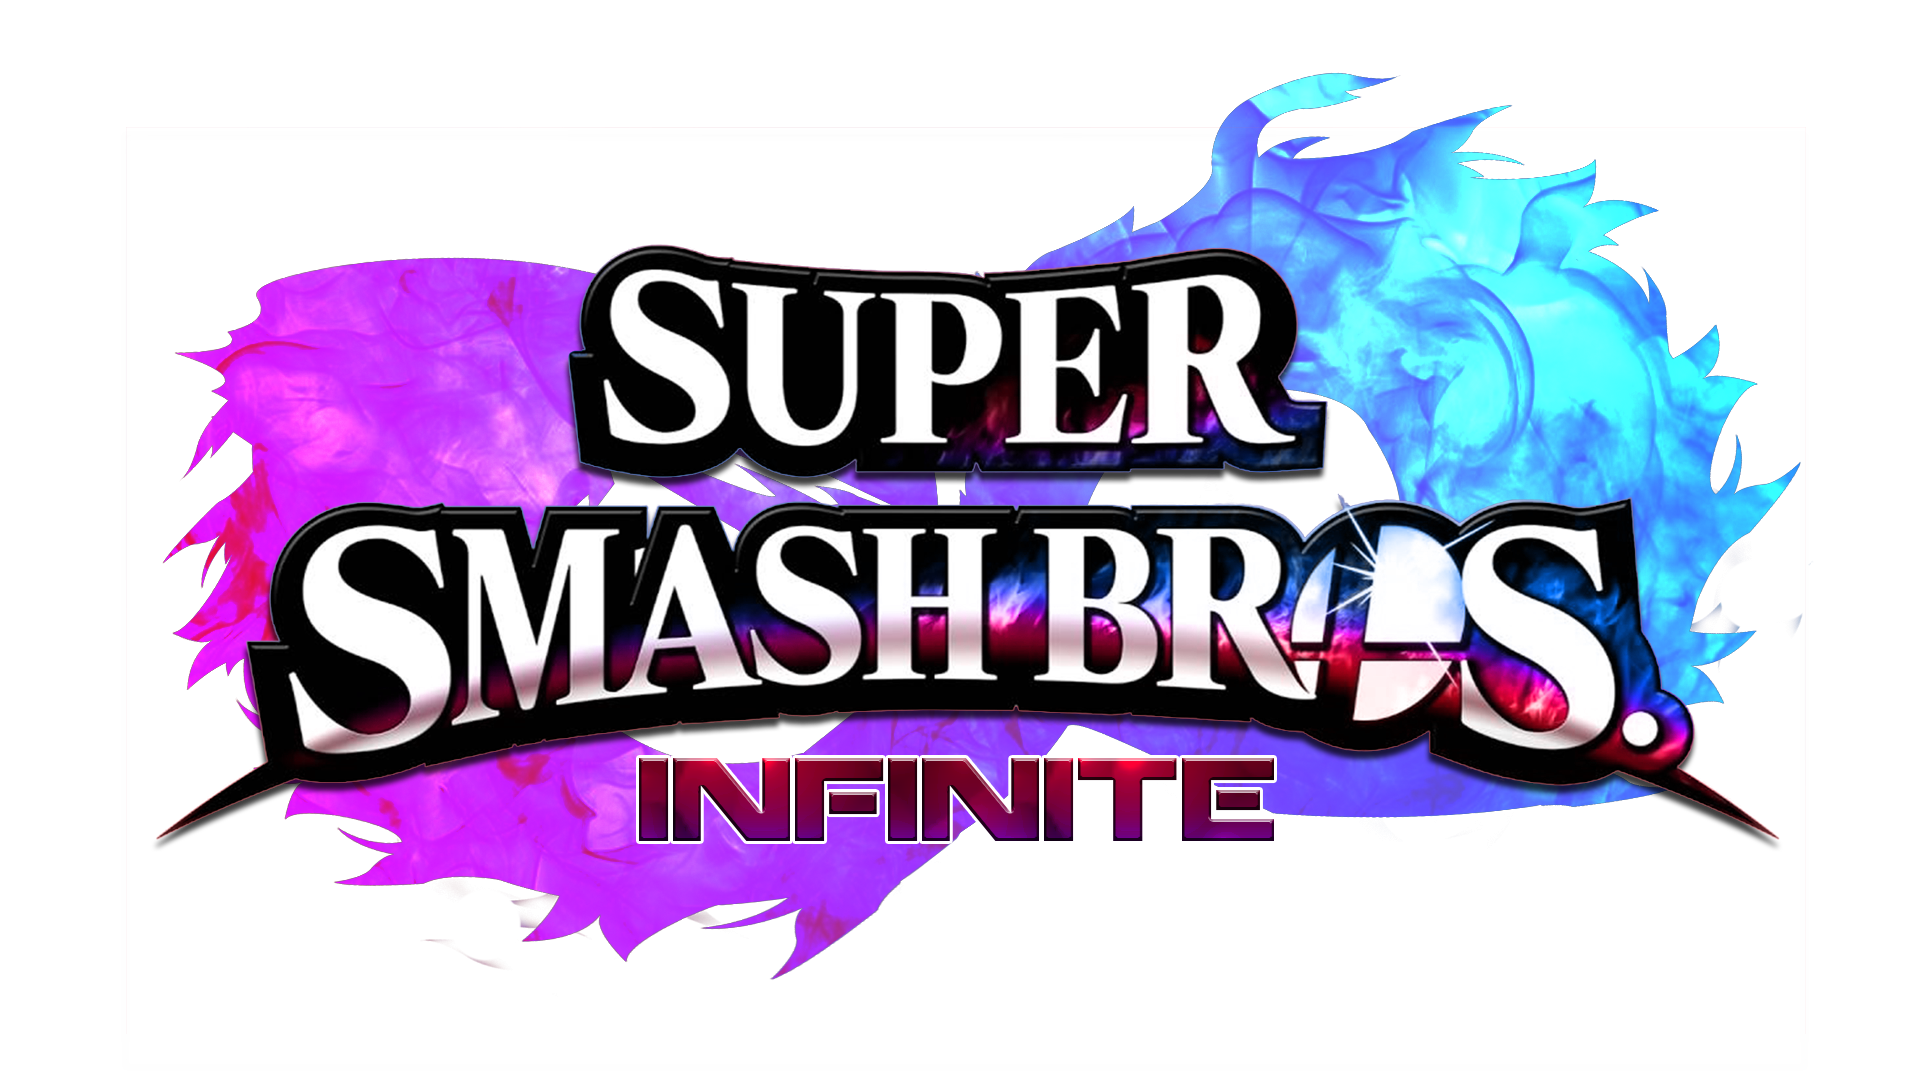 super smash bros infinite unlocks everything at launch